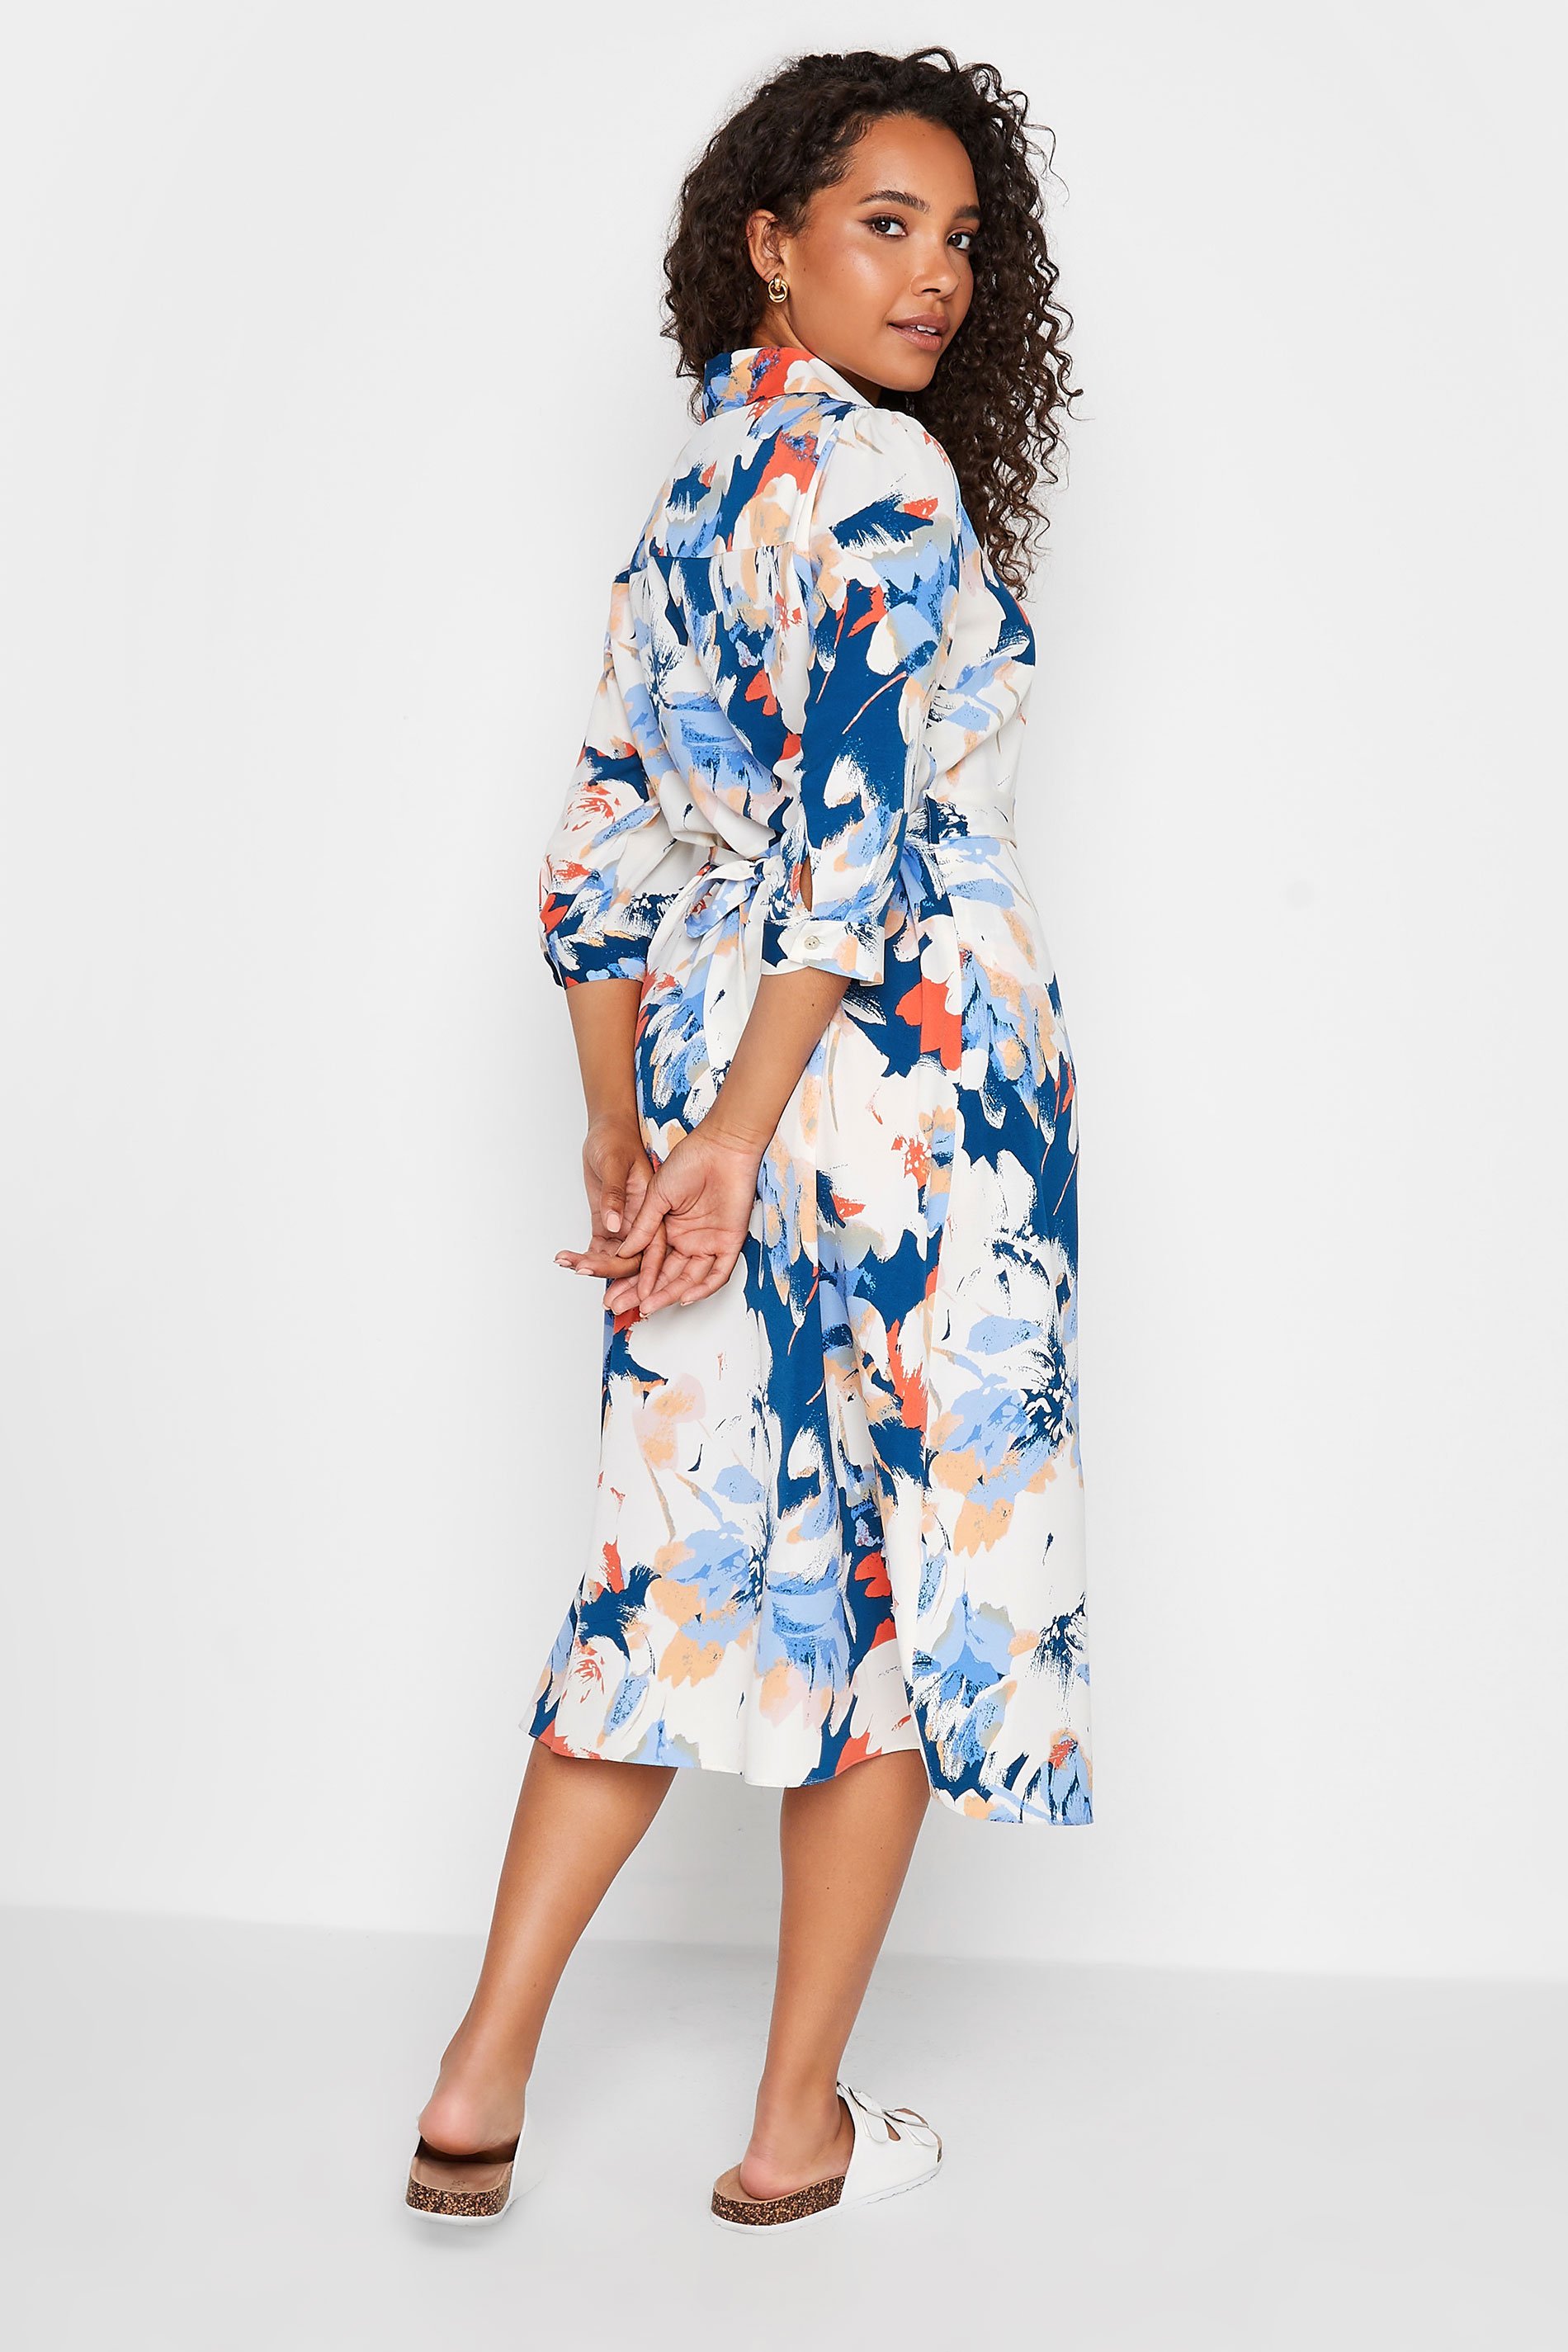 M&Co White & Blue Floral Print Button Through Shirt Dress | M&Co 3